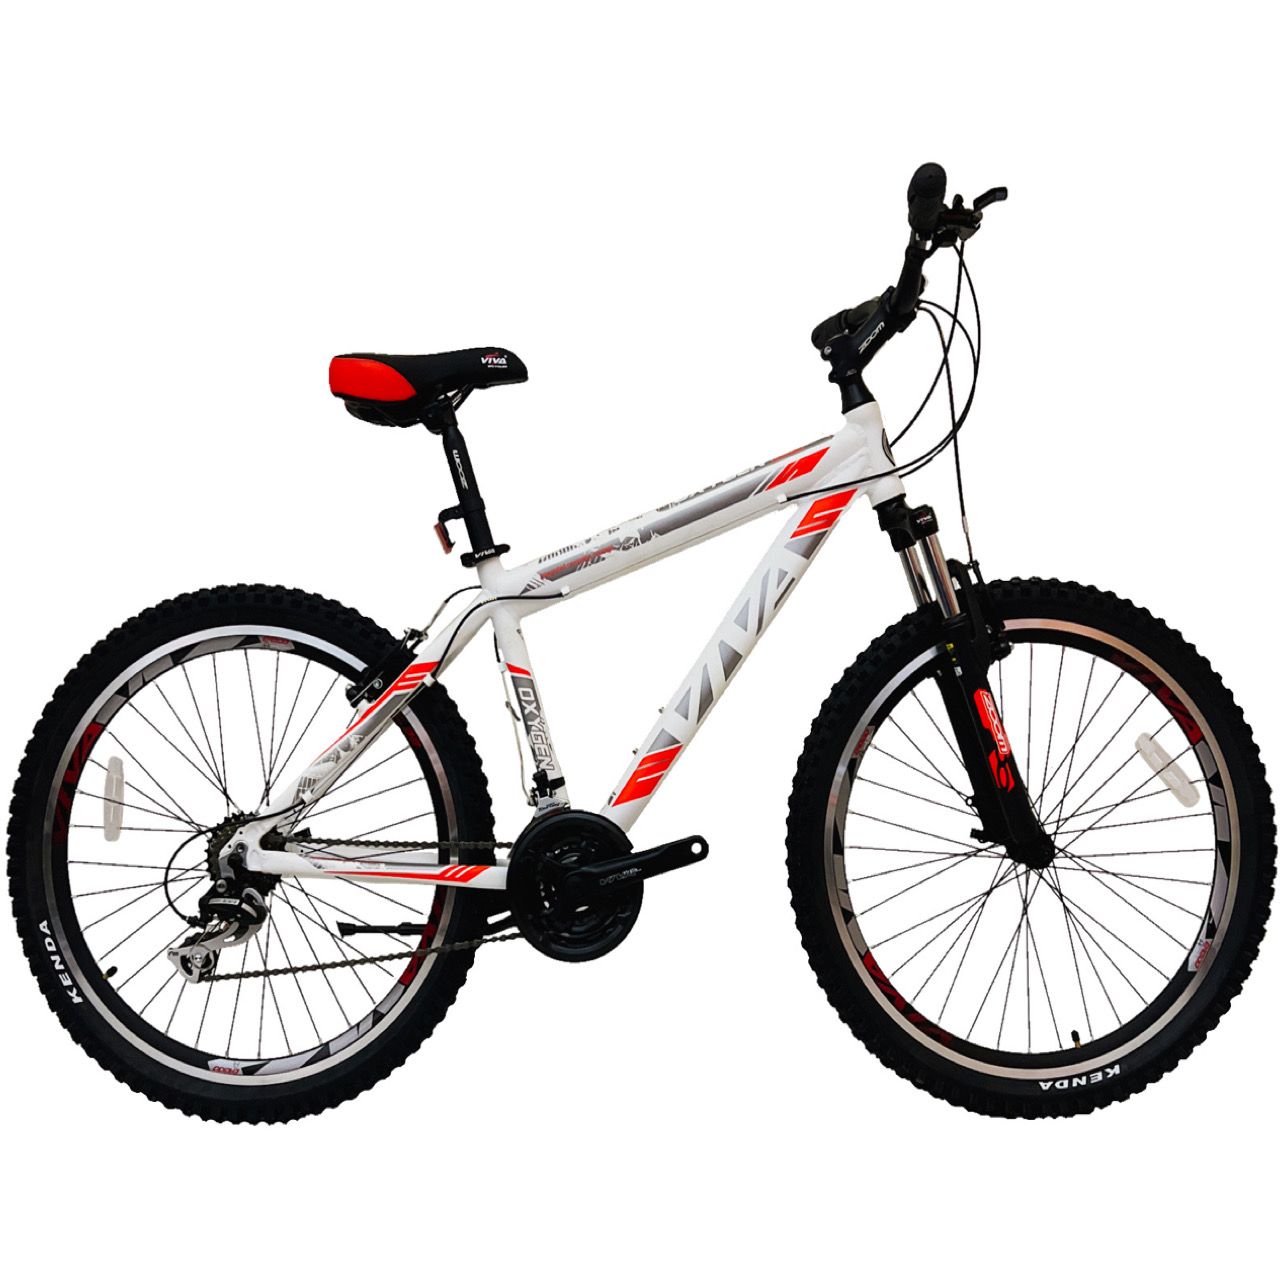 دوچرخه کوهستان ویوا مدل OXYGEN کد 100 سایز 26 -  - 1